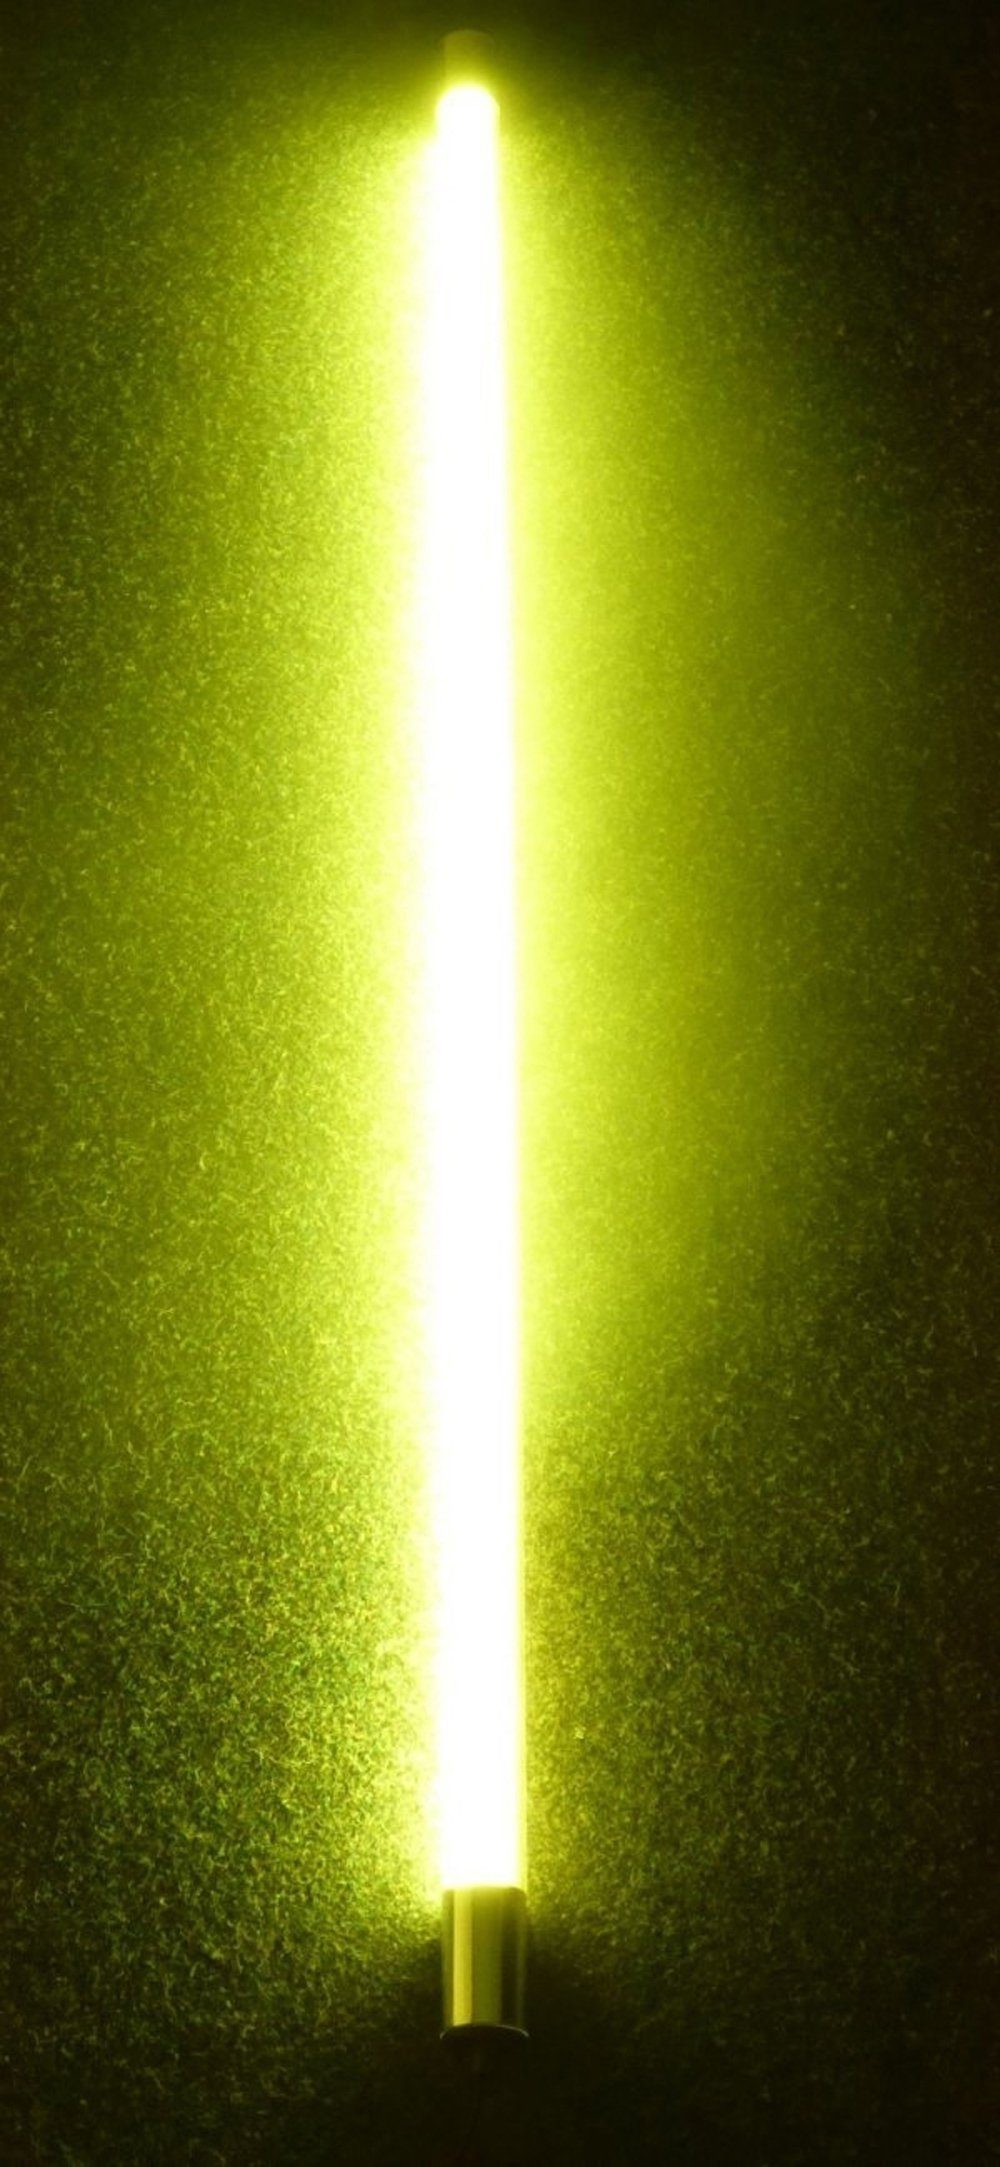 Röhre LED 9 IP20 XENON WK gelb, Stab 9947 63cm W LED Wandleuchte VISION T8, Xenon Kunststoff-Röhre LED